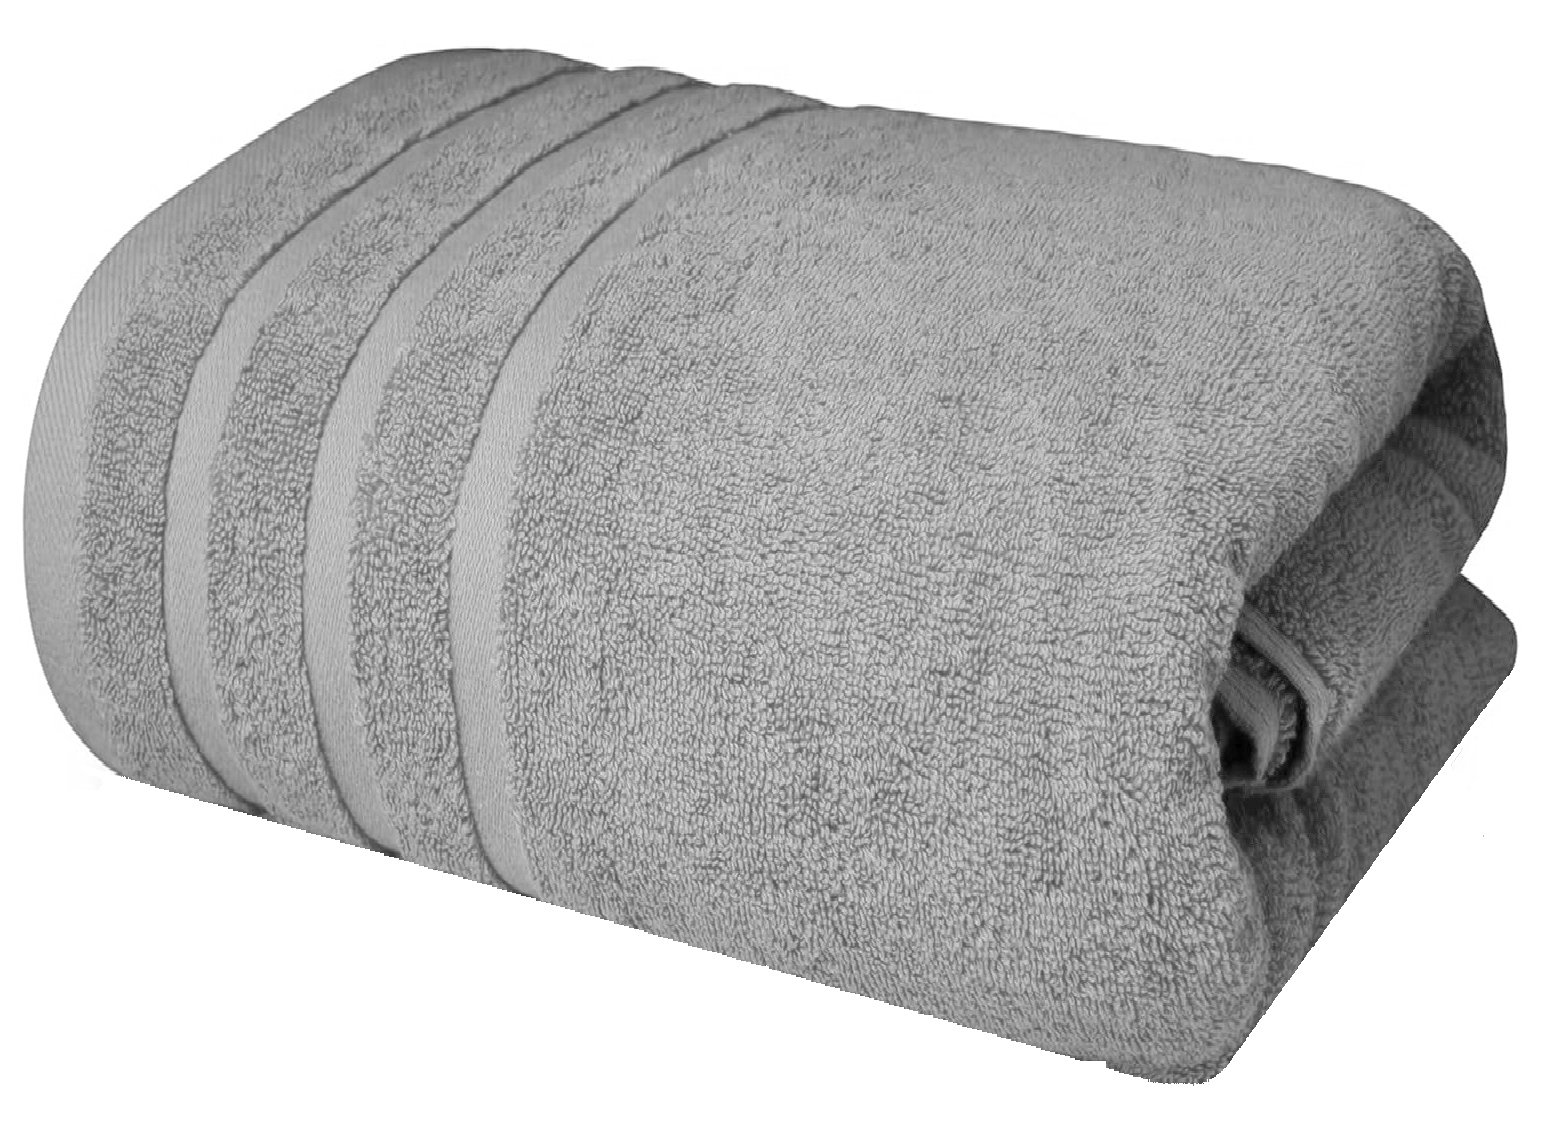 Bath Sheet towels (800 GSM) 90 x 150-cm 100% Egyptian Cotton Bath Sheet